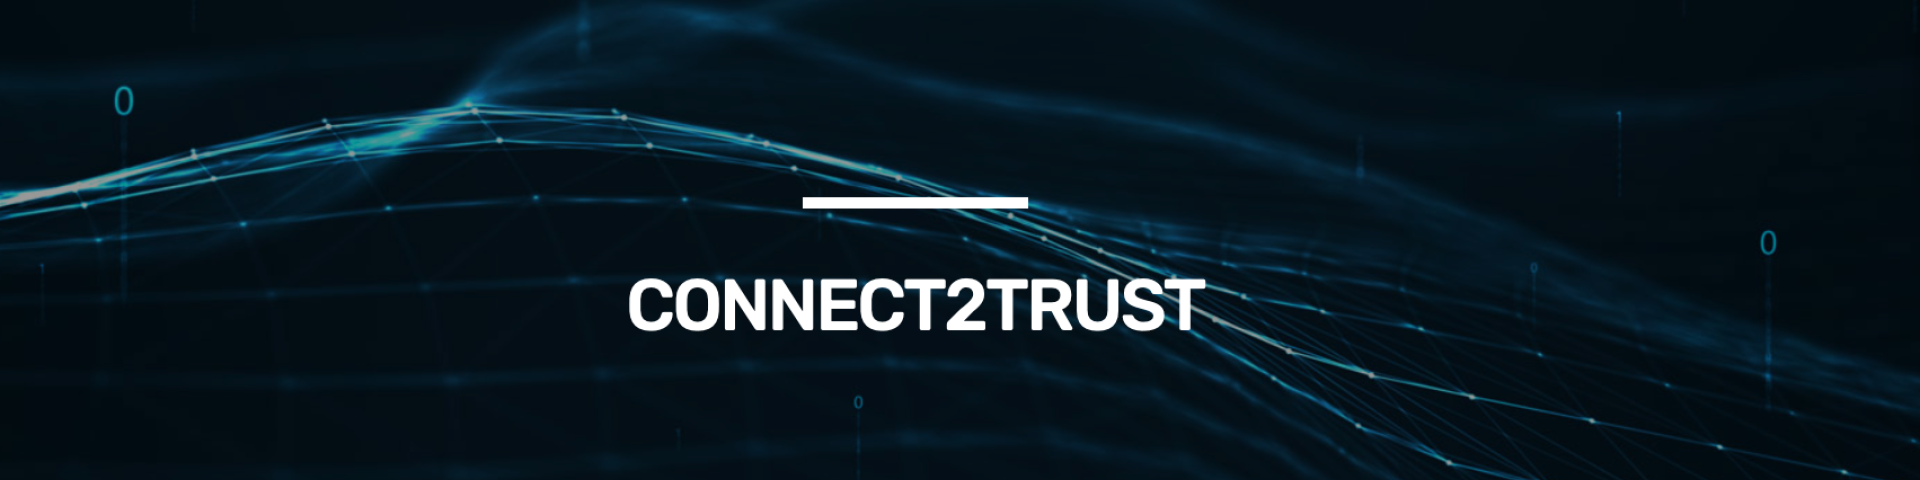 Connect2Trust header